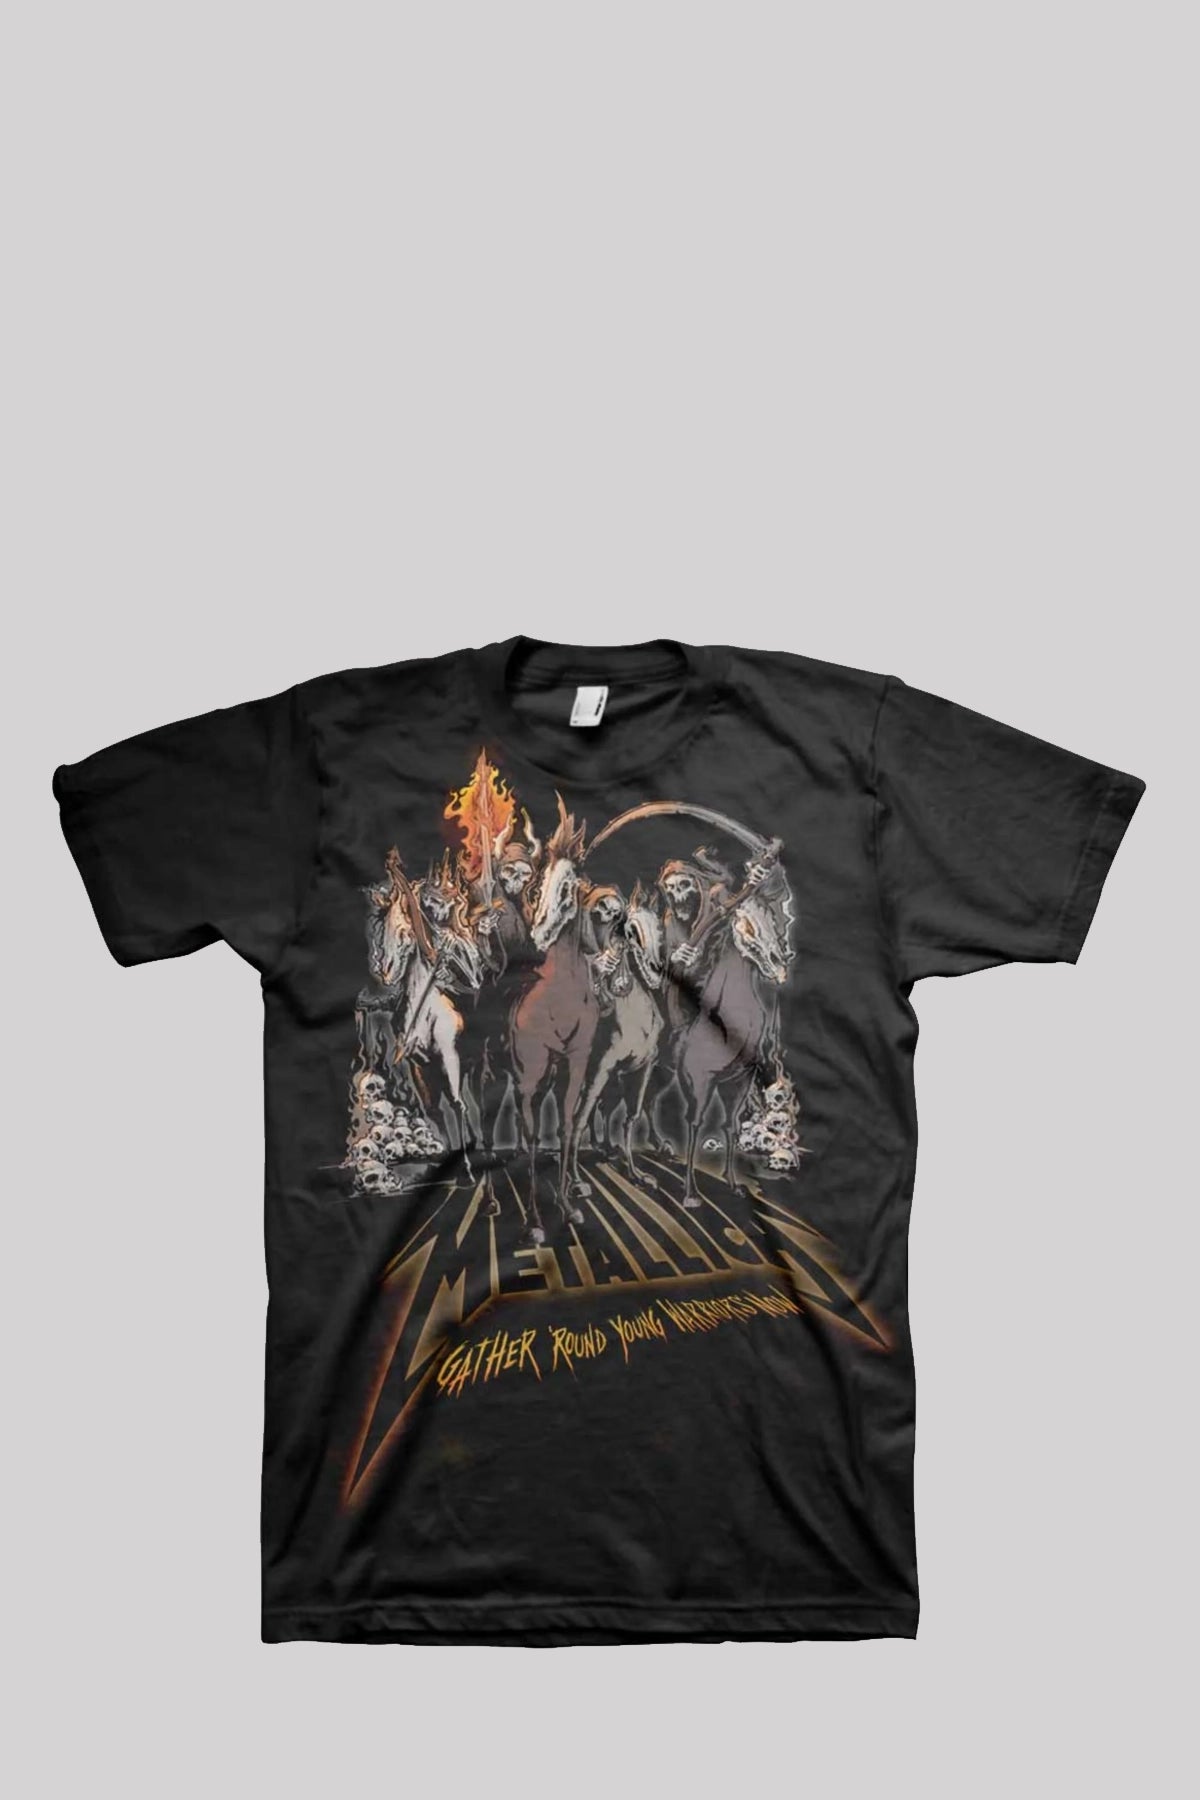 Metallica 40th Anniversary Horsemen T-Shirt (Unisex, Black, S)